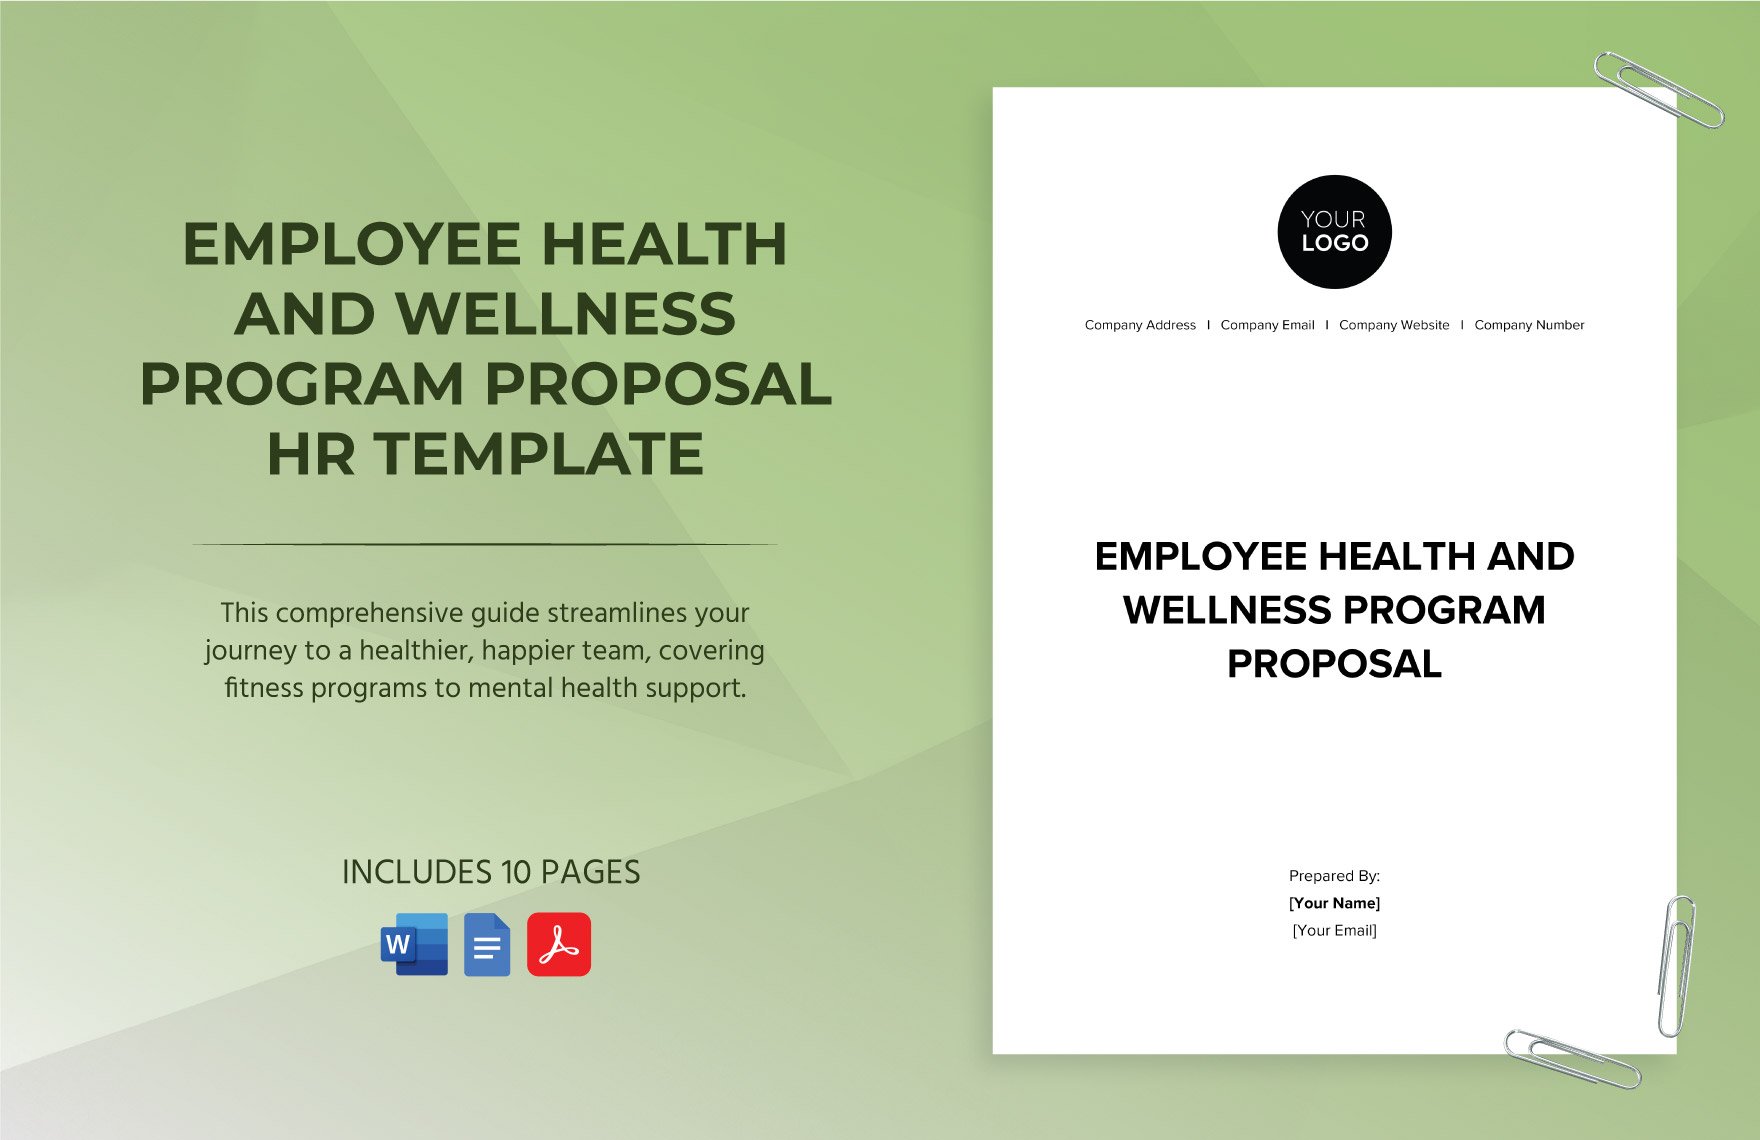 Employee Health and Wellness Program Proposal HR Template